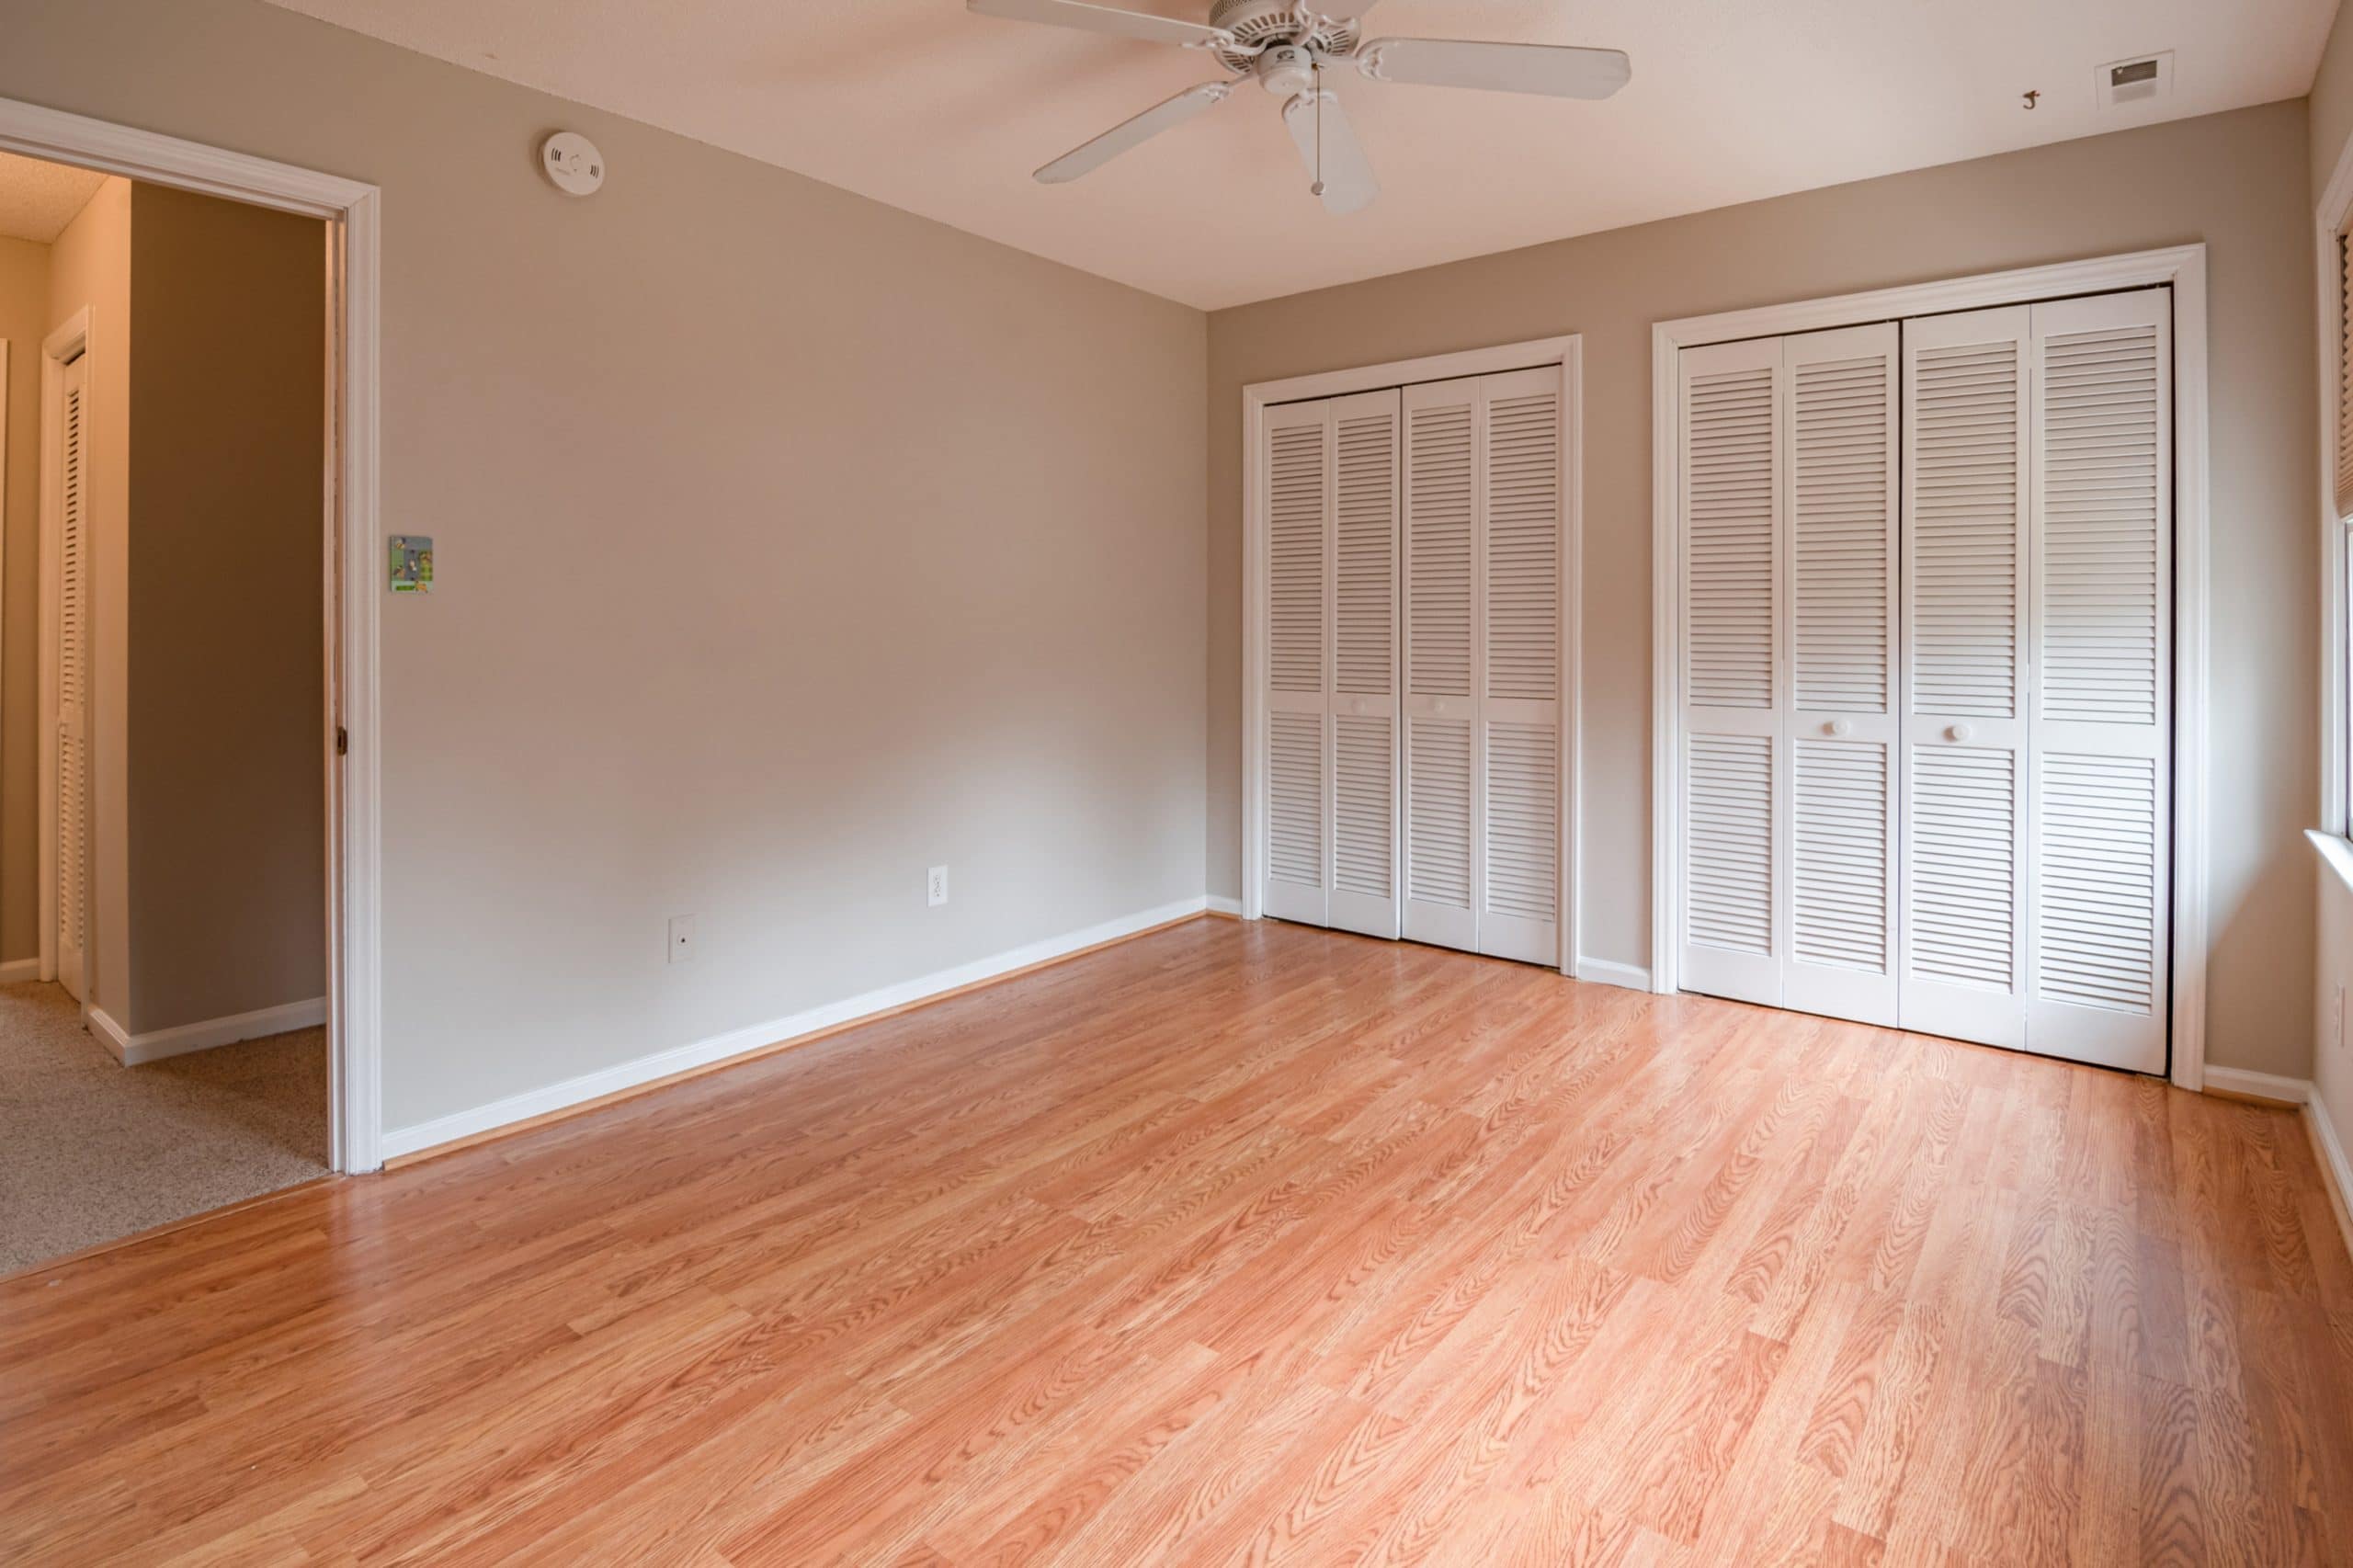 A clean hardwood floor